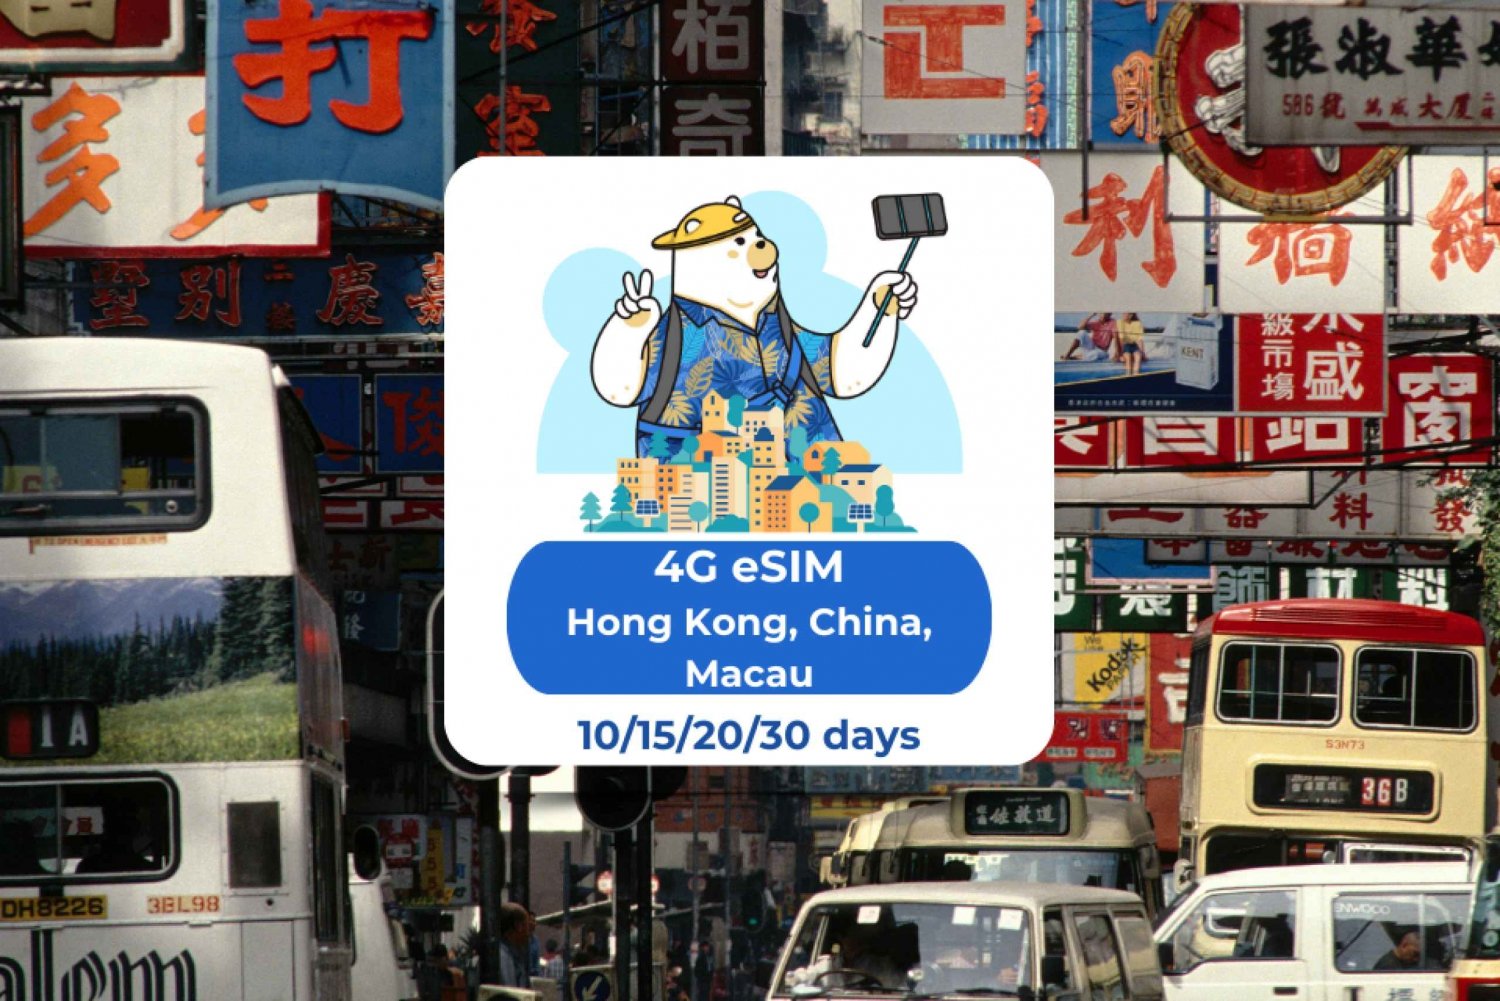 Hong Kong - Kina - Macau: eSIM mobildata 10/15/20/30 dage